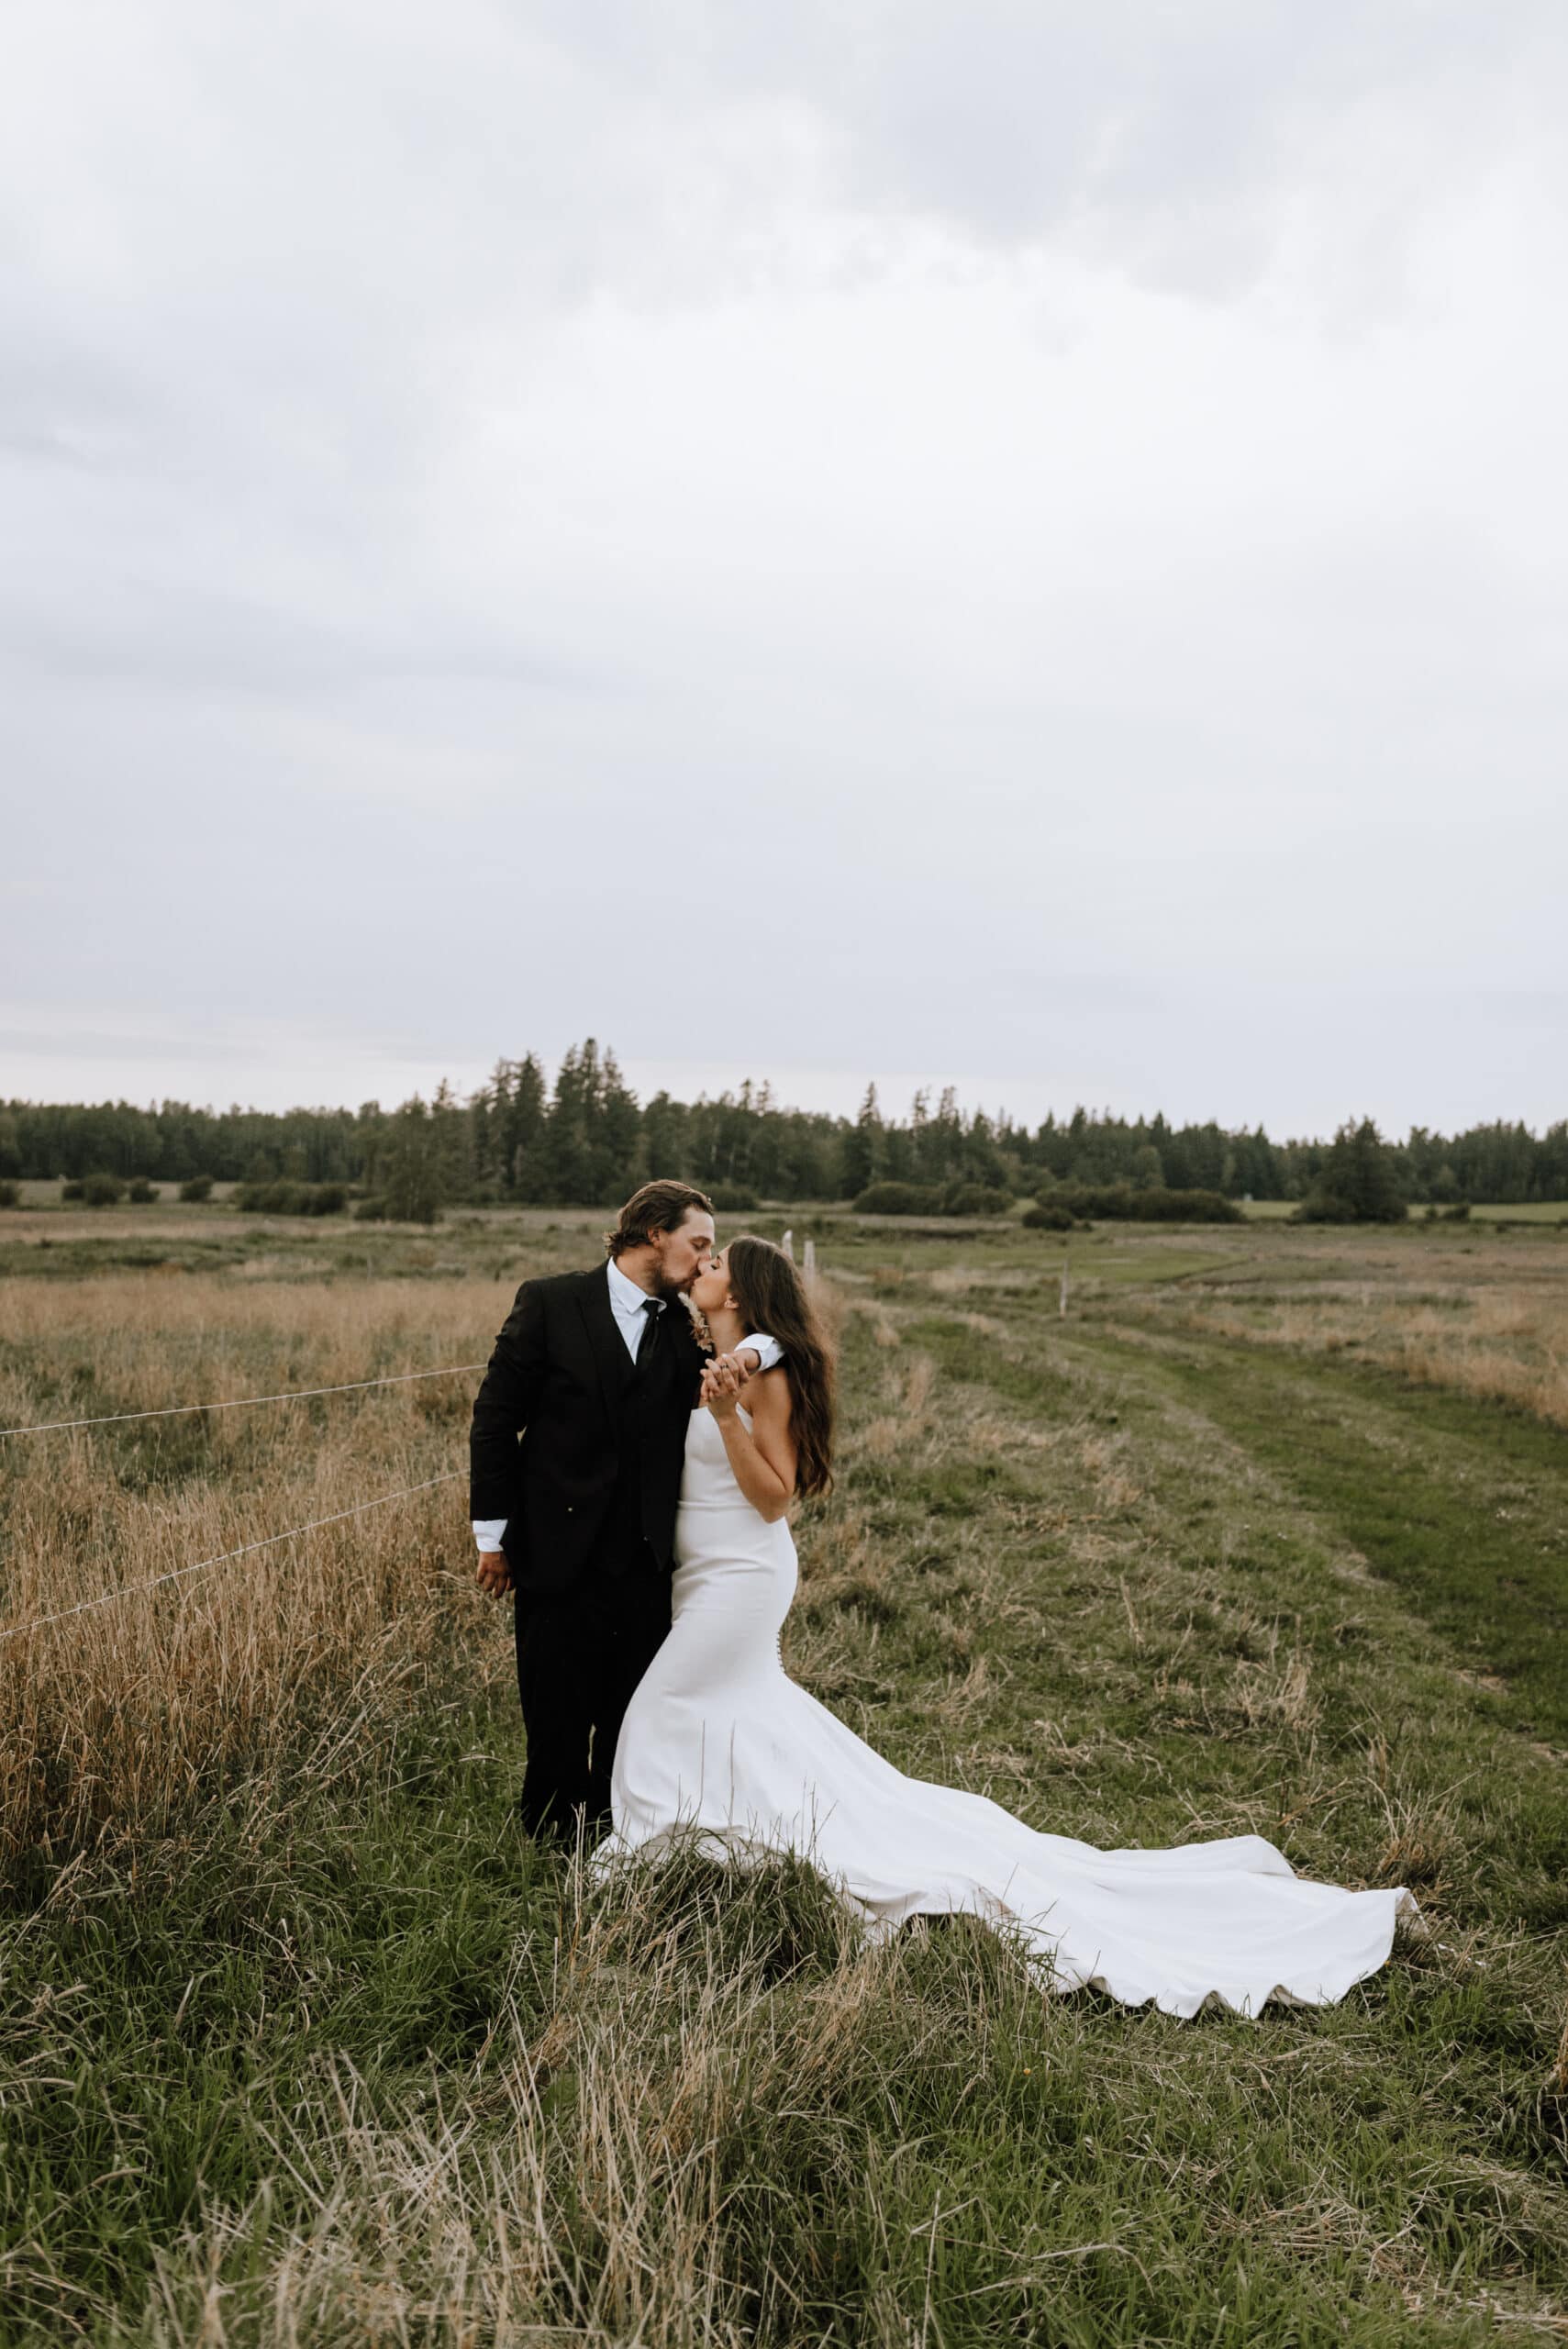 New Brunswick Wedding photographer - Michaela Bell Photography